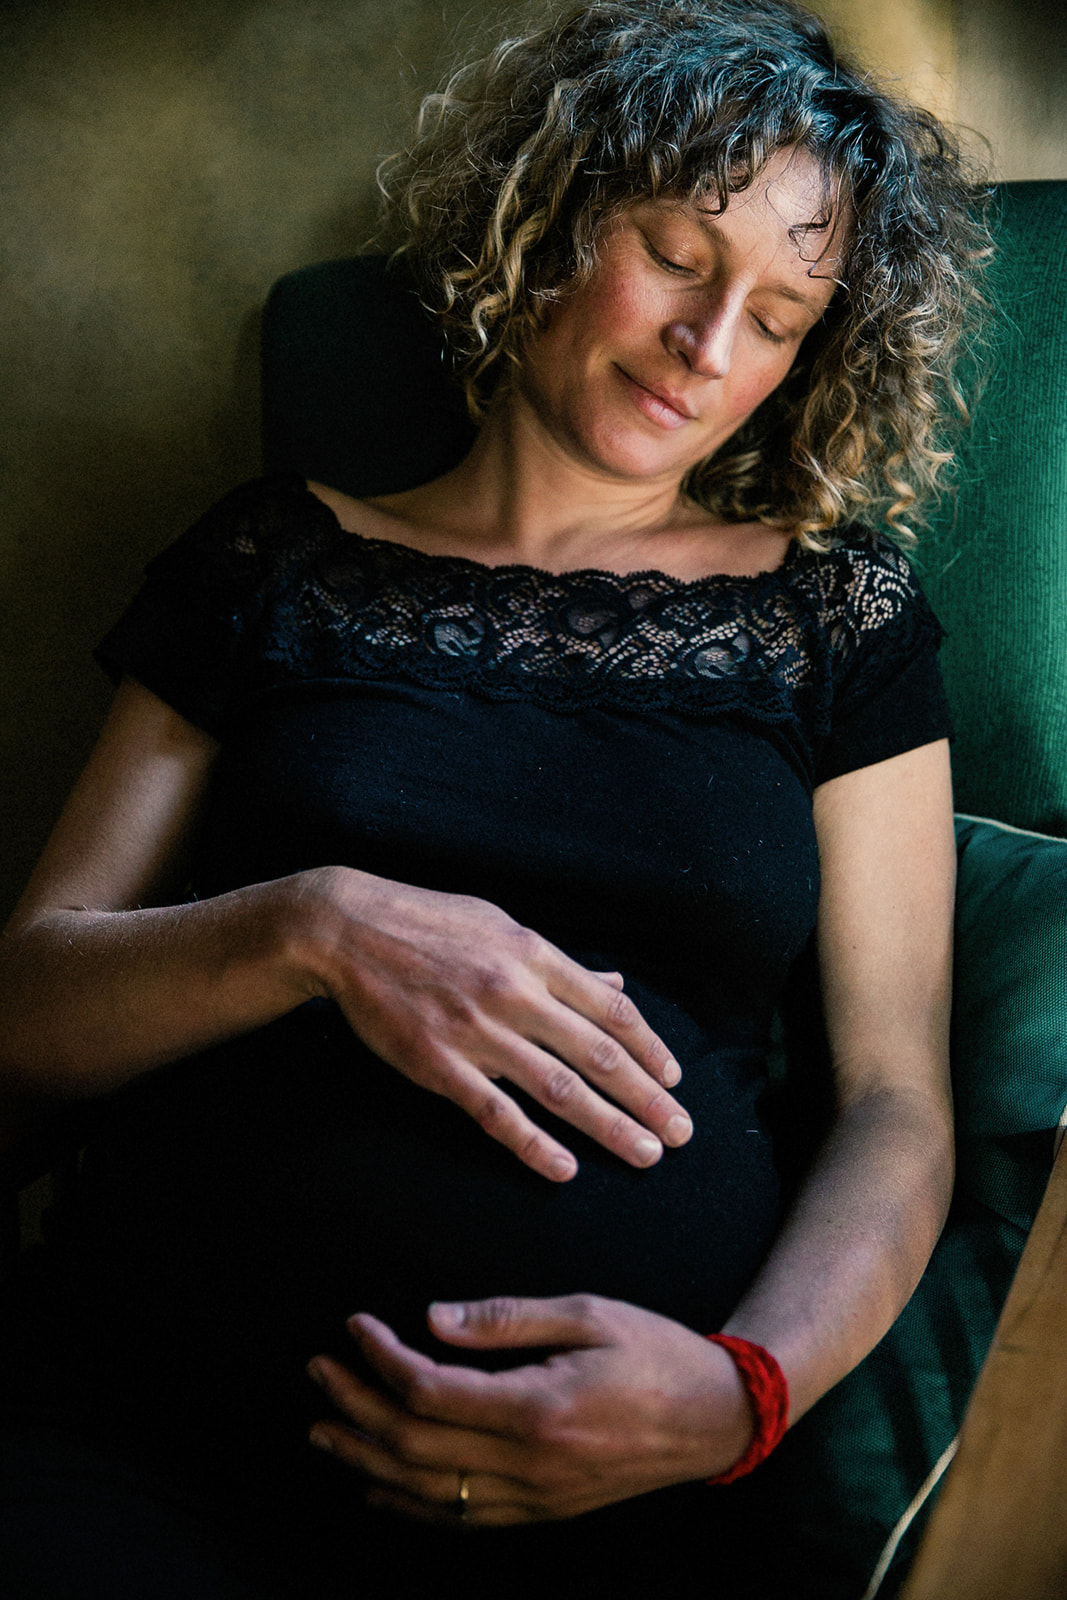 Natural photos of a pregnancy photo shoot photographed near Cardedeu in Barcelona